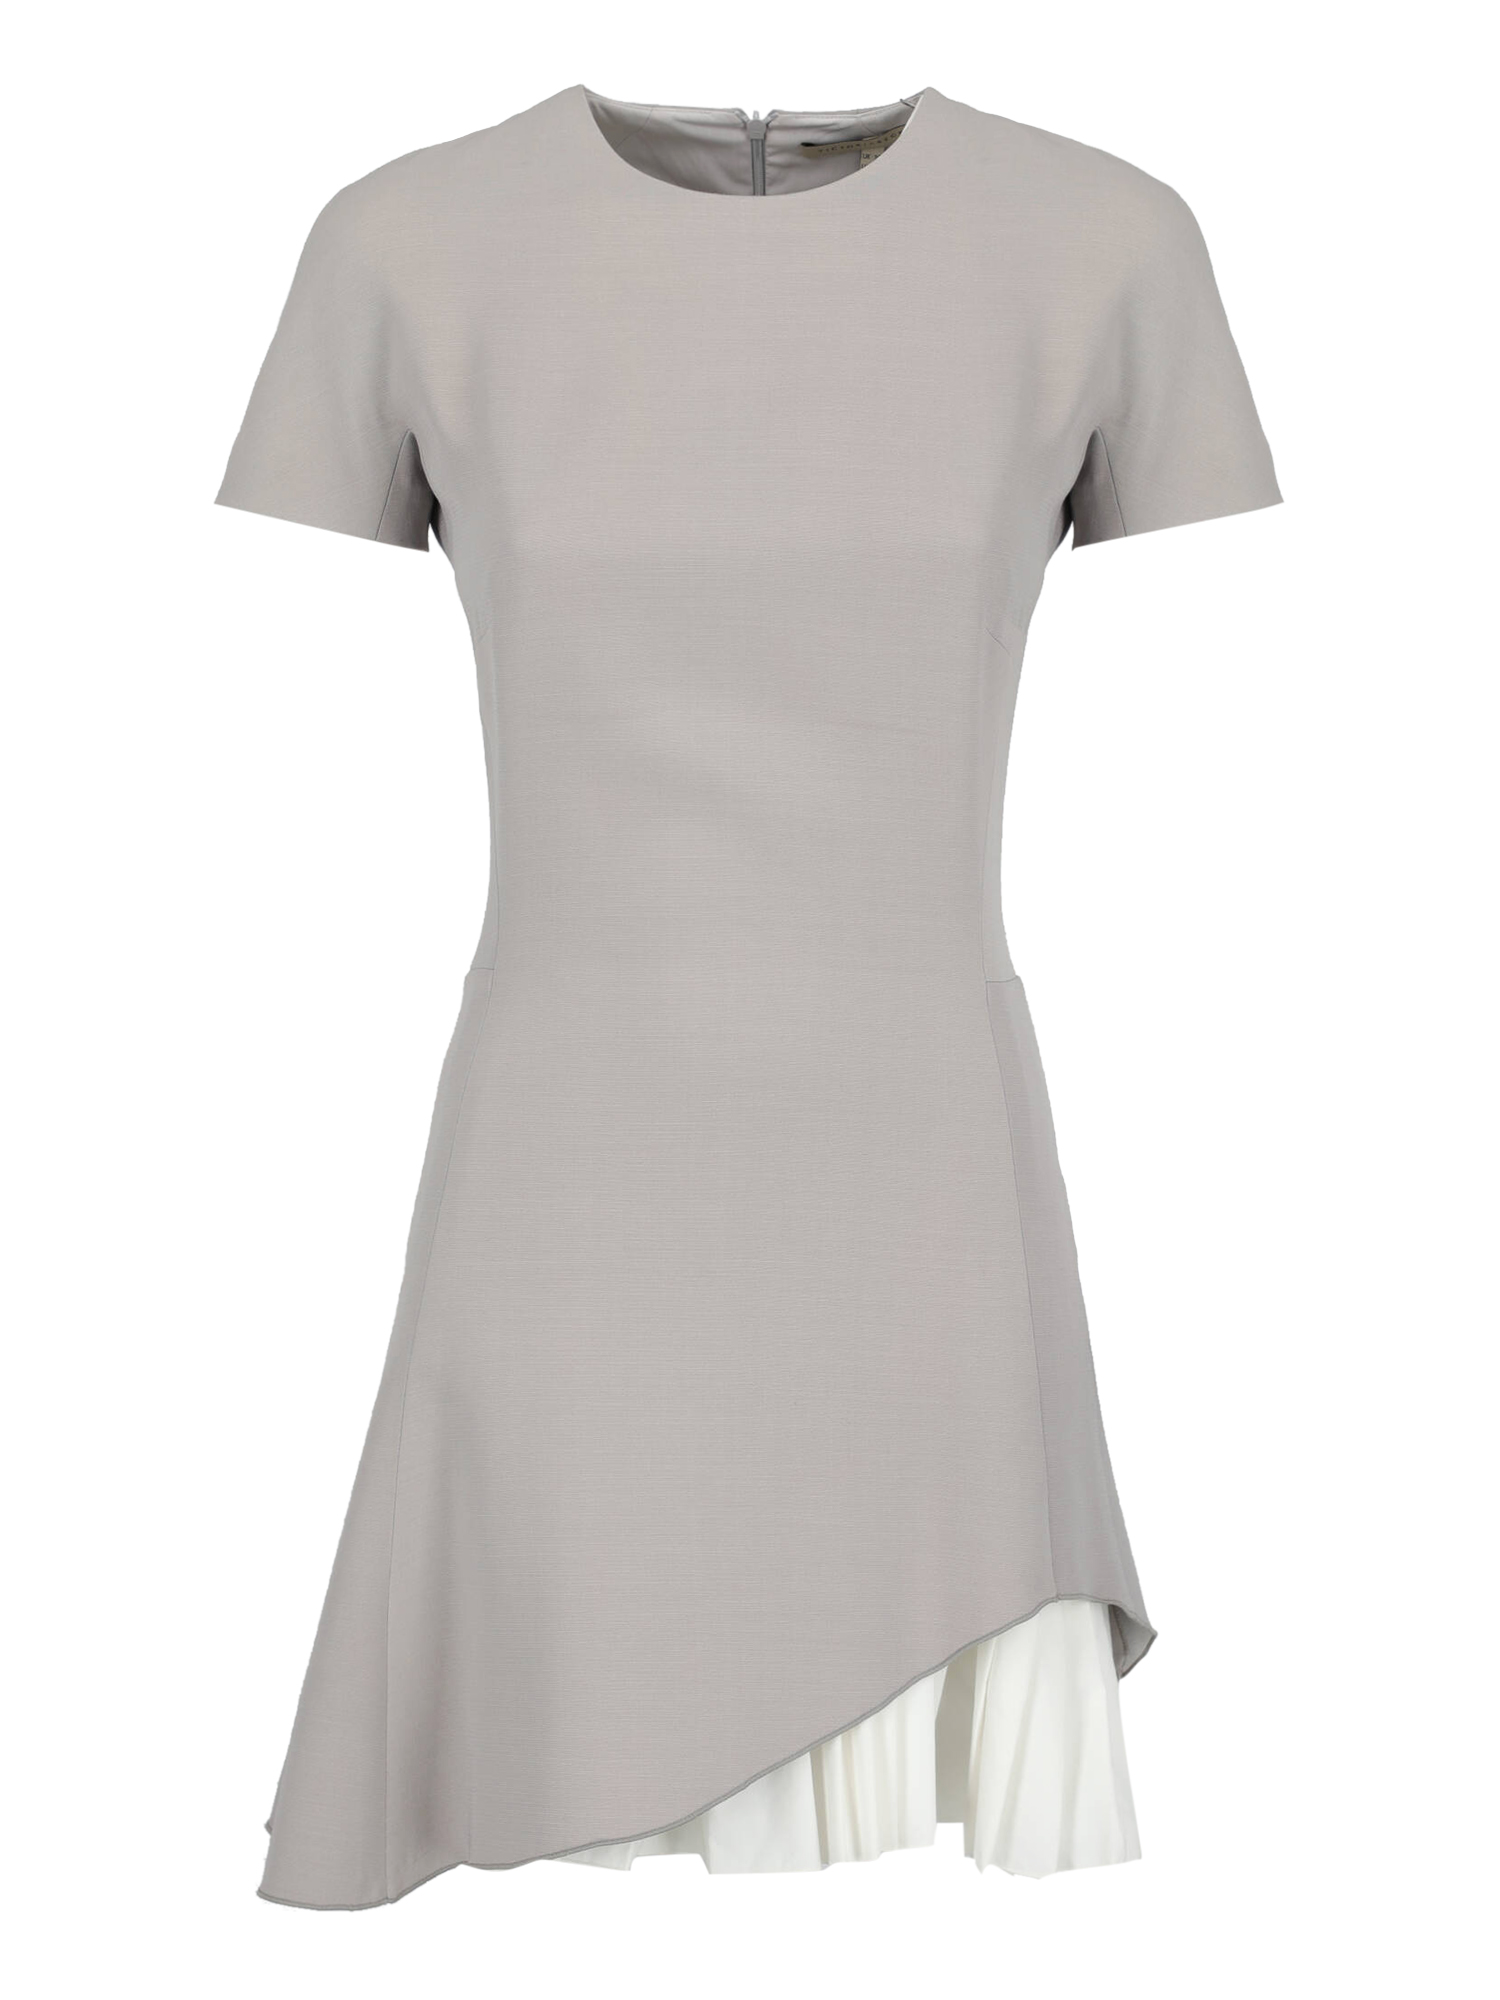 Robes Pour Femme - Victoria Beckham - En Fabric Grey - Taille:  -